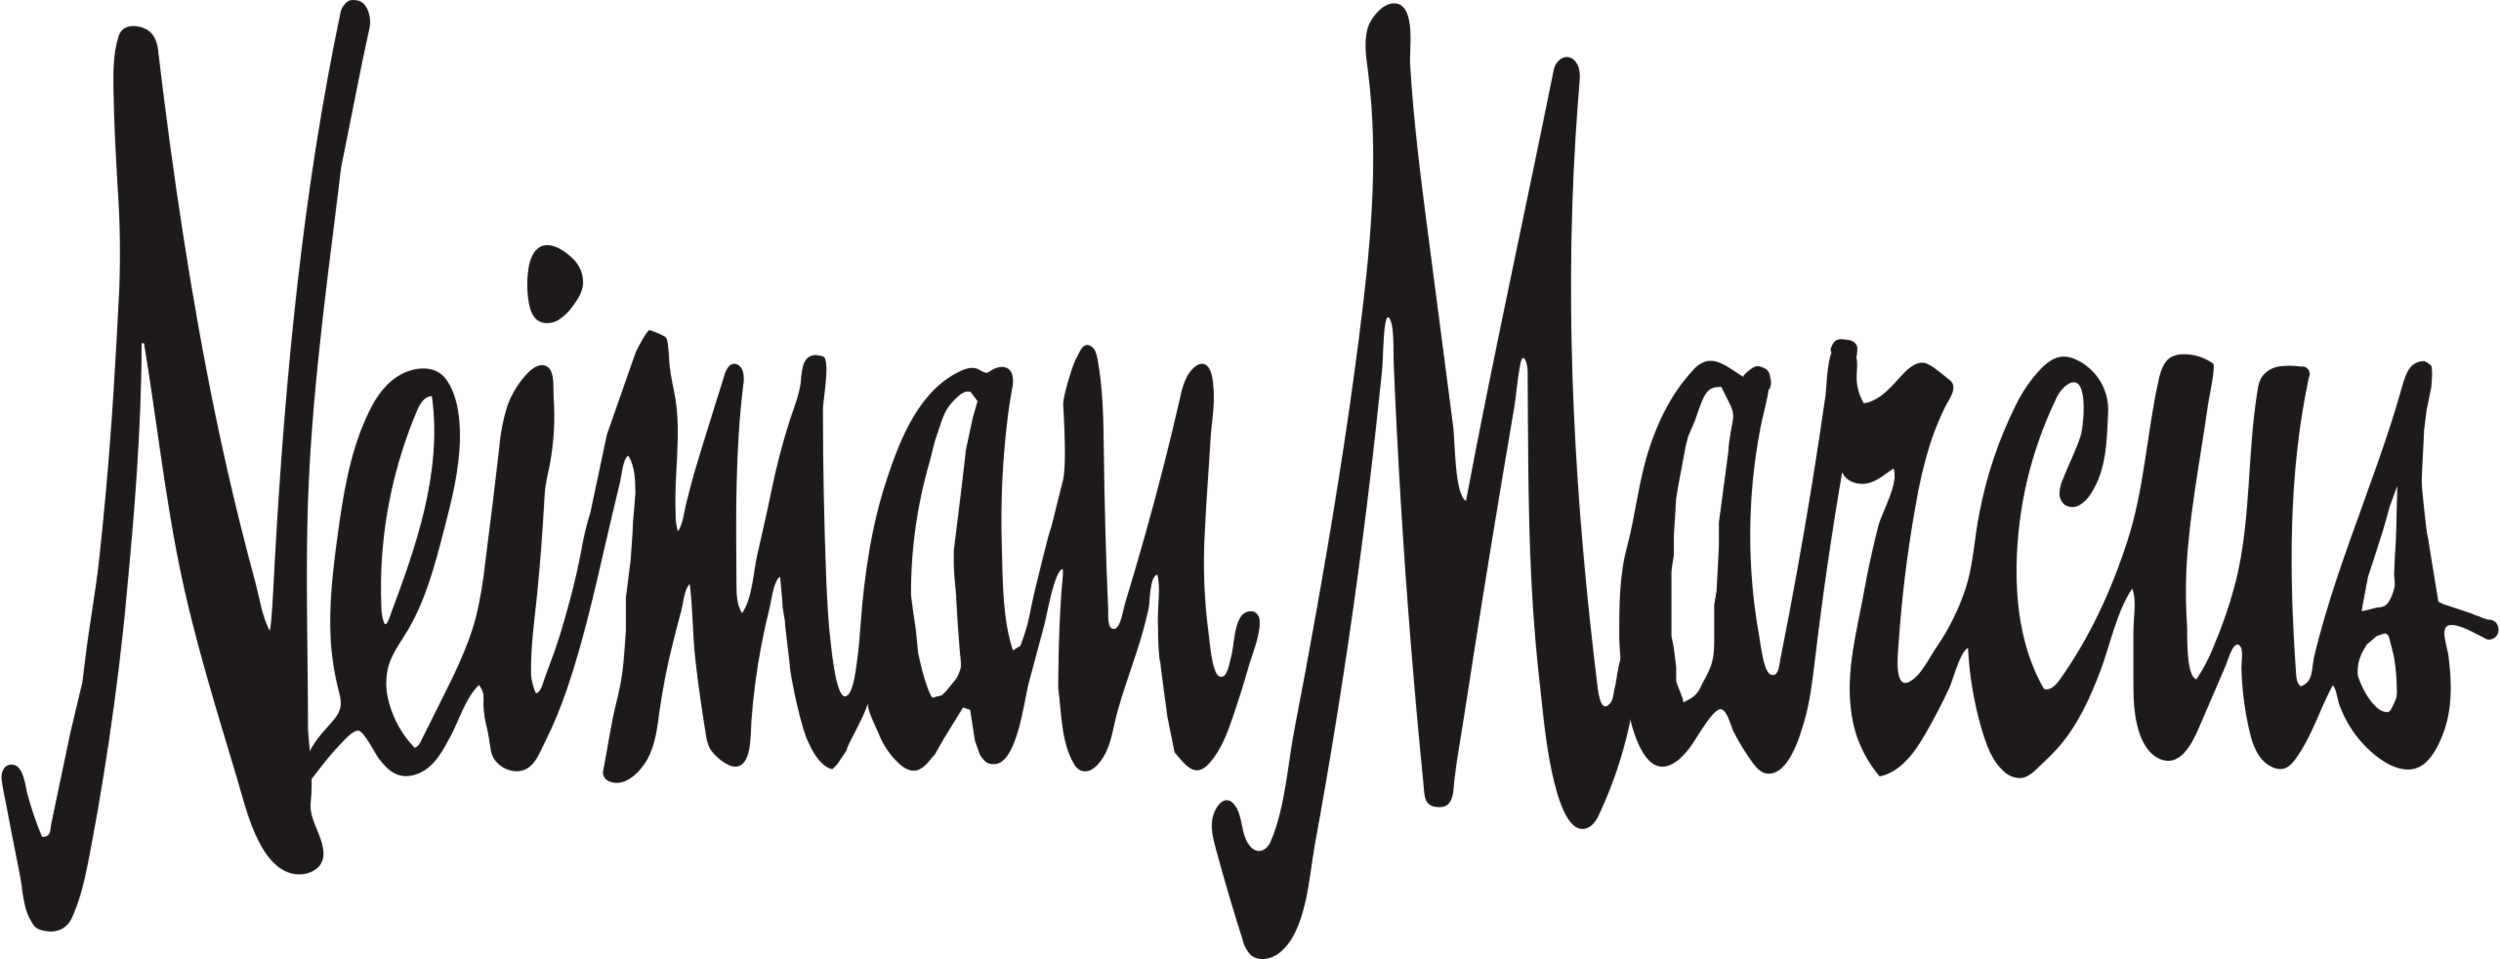 Neiman_Marcus_logo-min.png